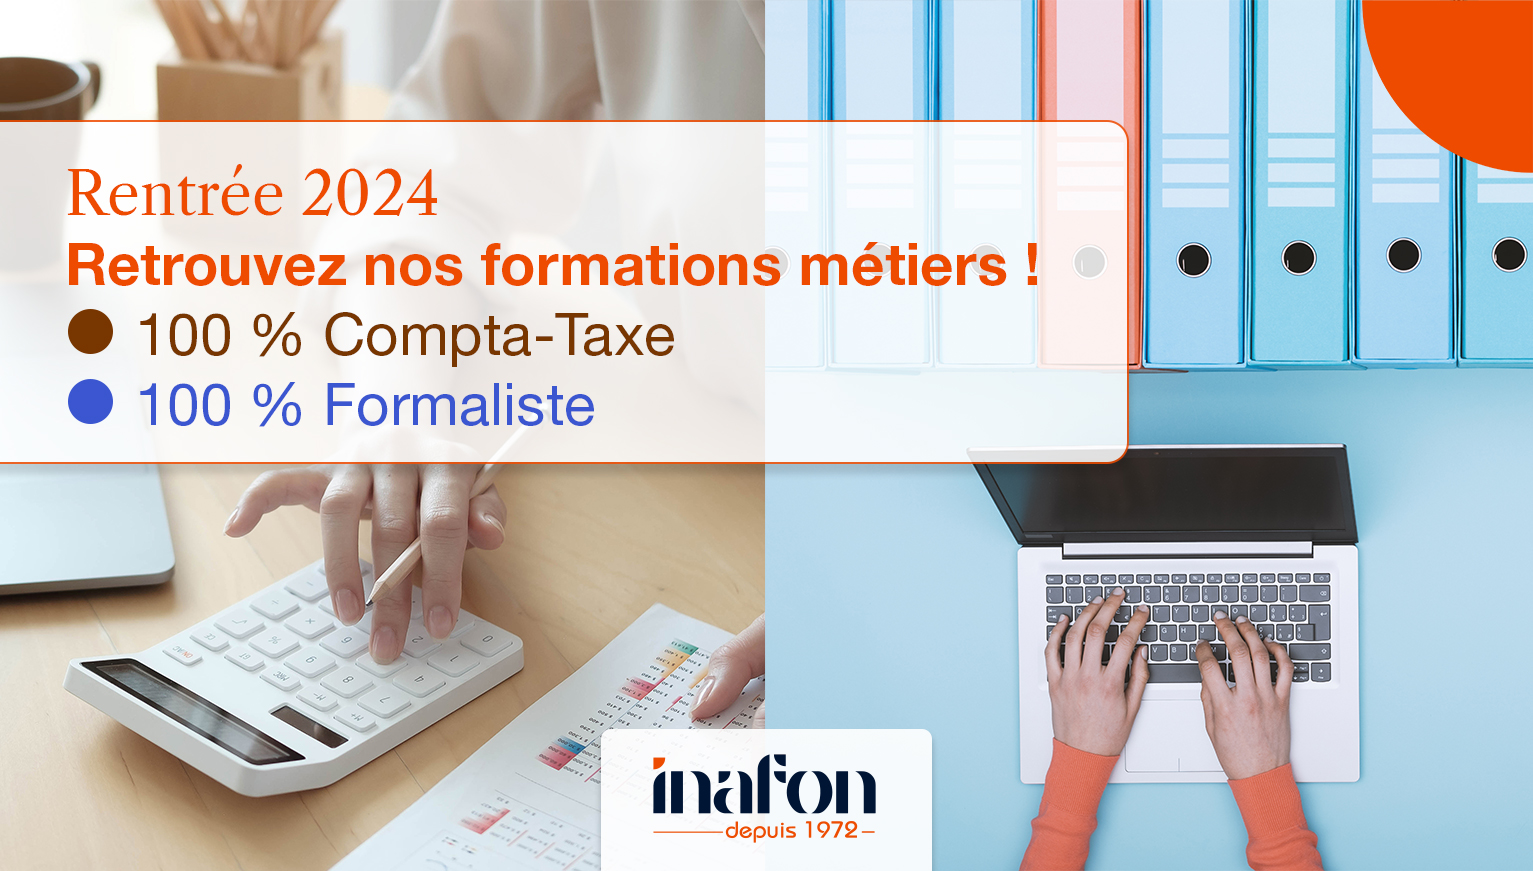 actu-inafon-formations-metiers-2024-664345561201f077468211.jpg